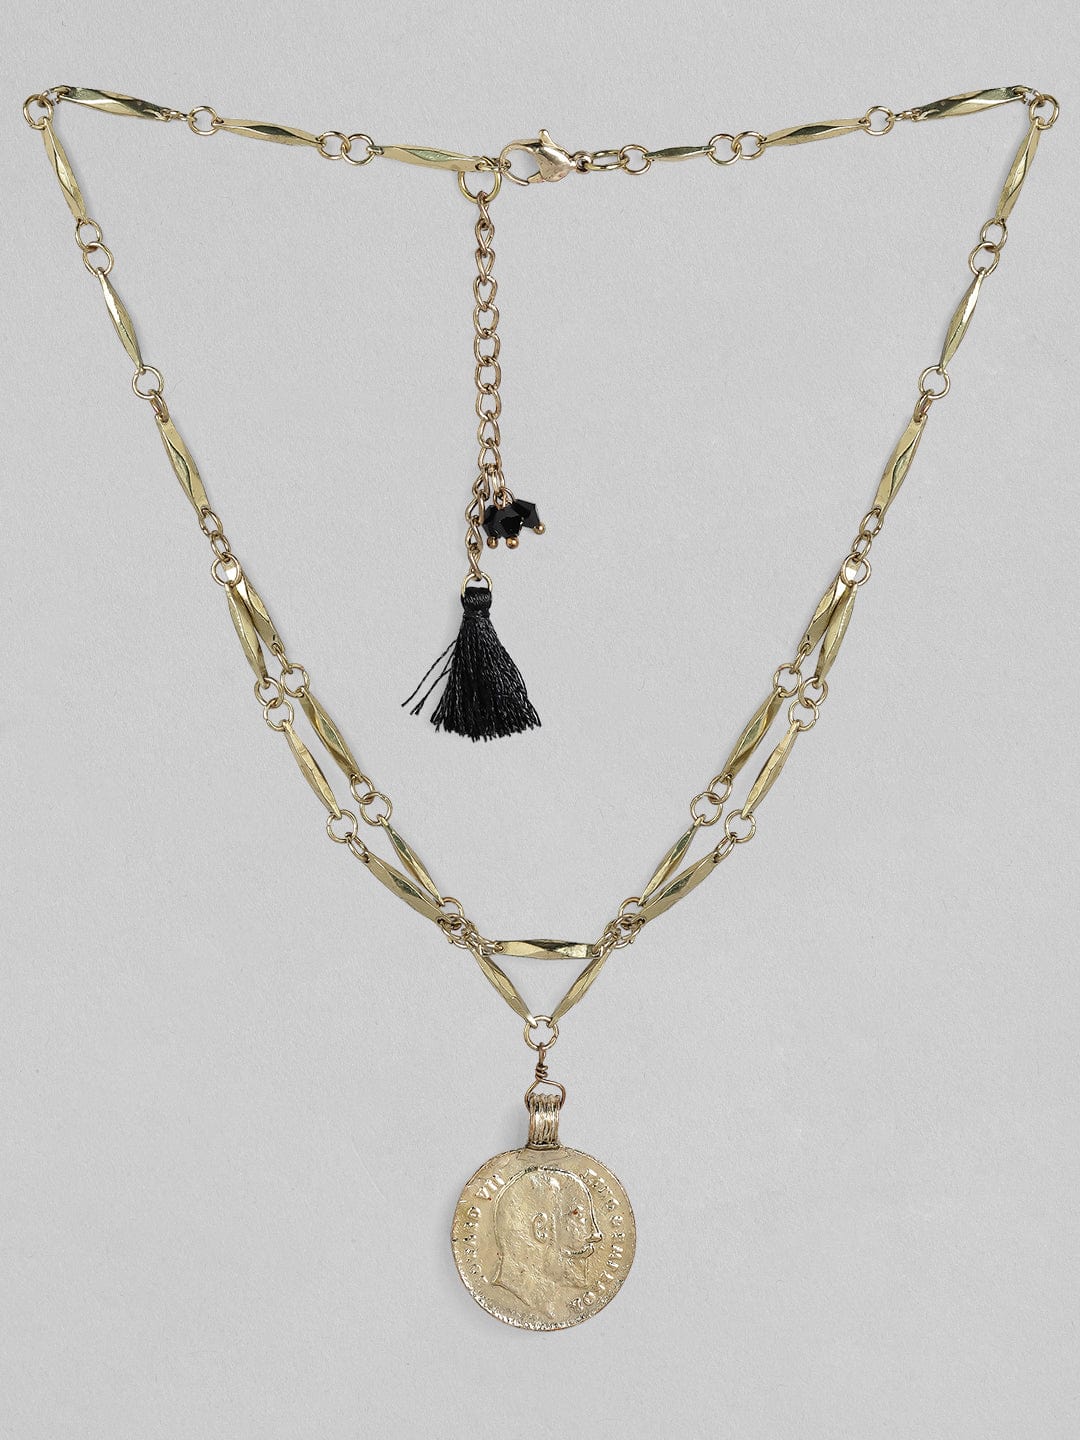 Vintage Silver Tone & Black Necklace Layered Necklace BOHO, Signed NY | eBay